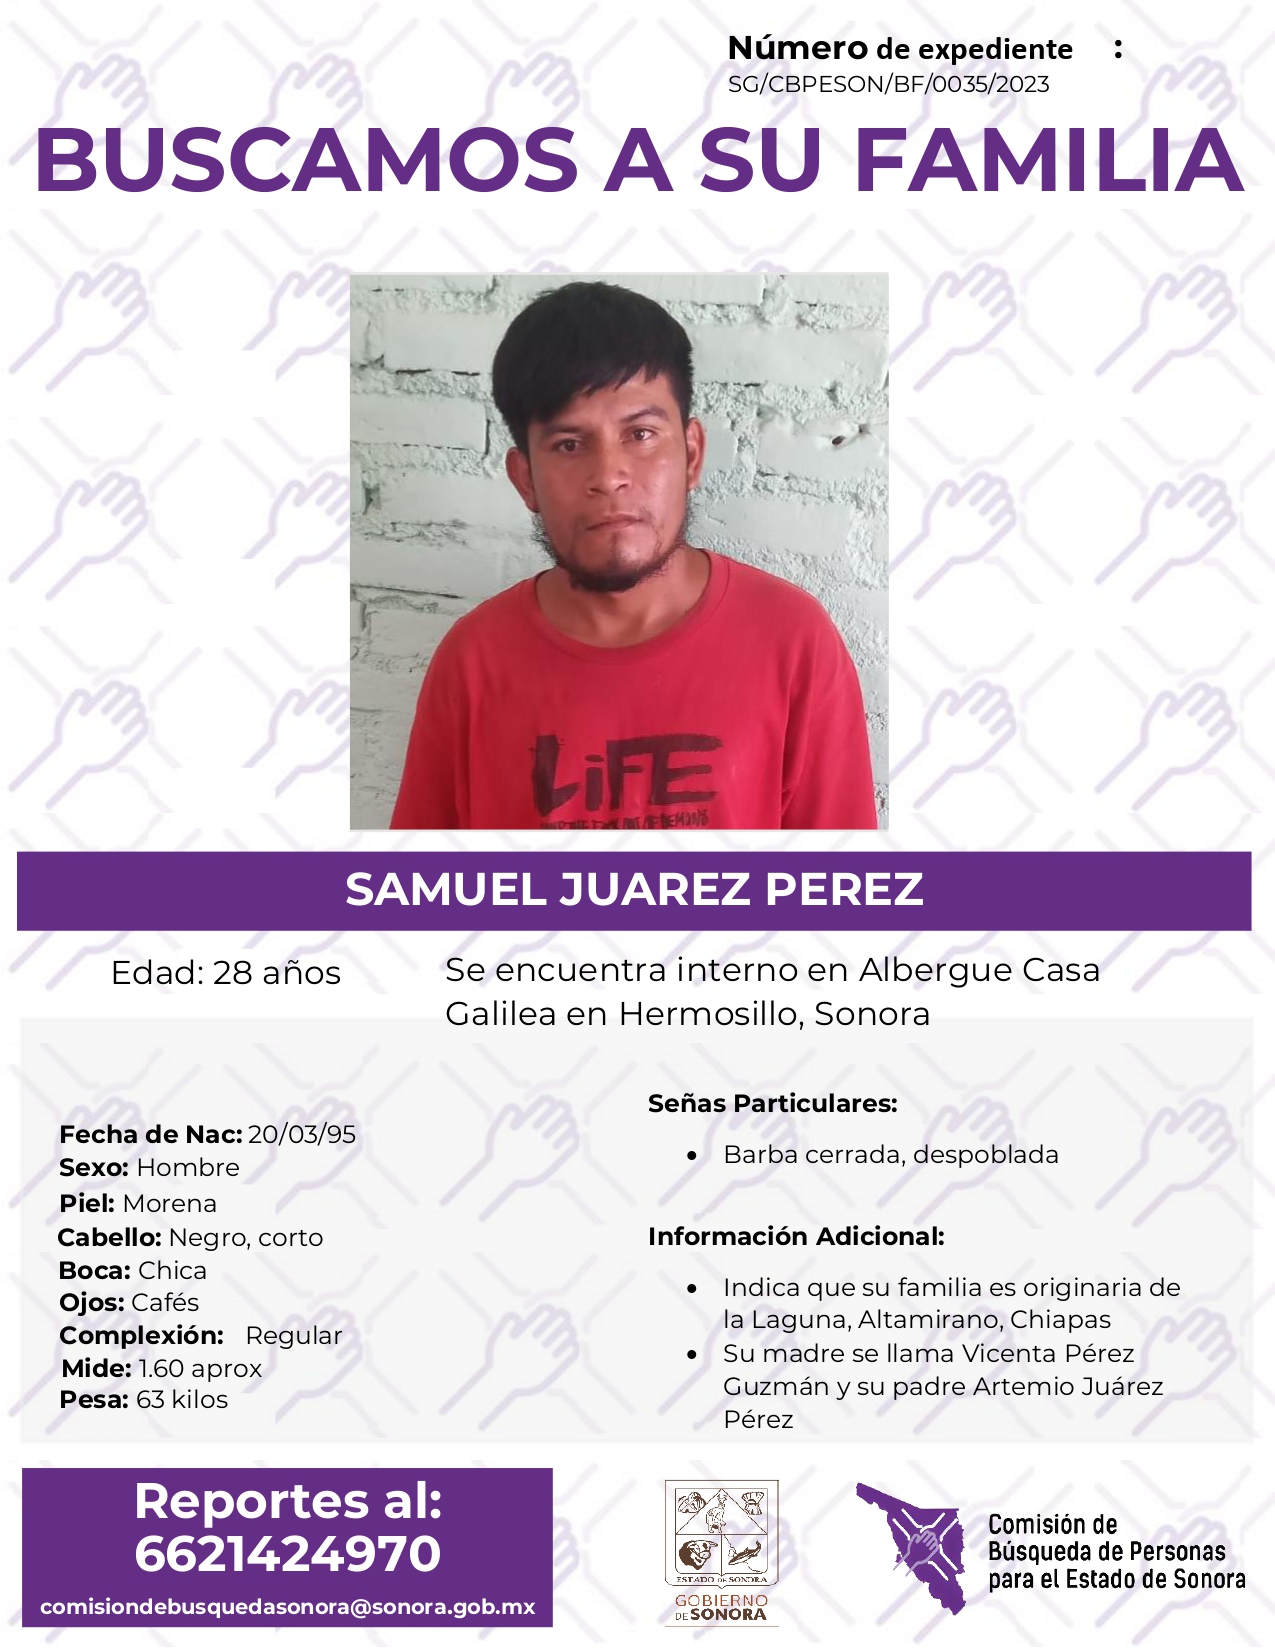 SAMUEL JUAREZ PEREZ - BUSQUEDA DE FAMILIA